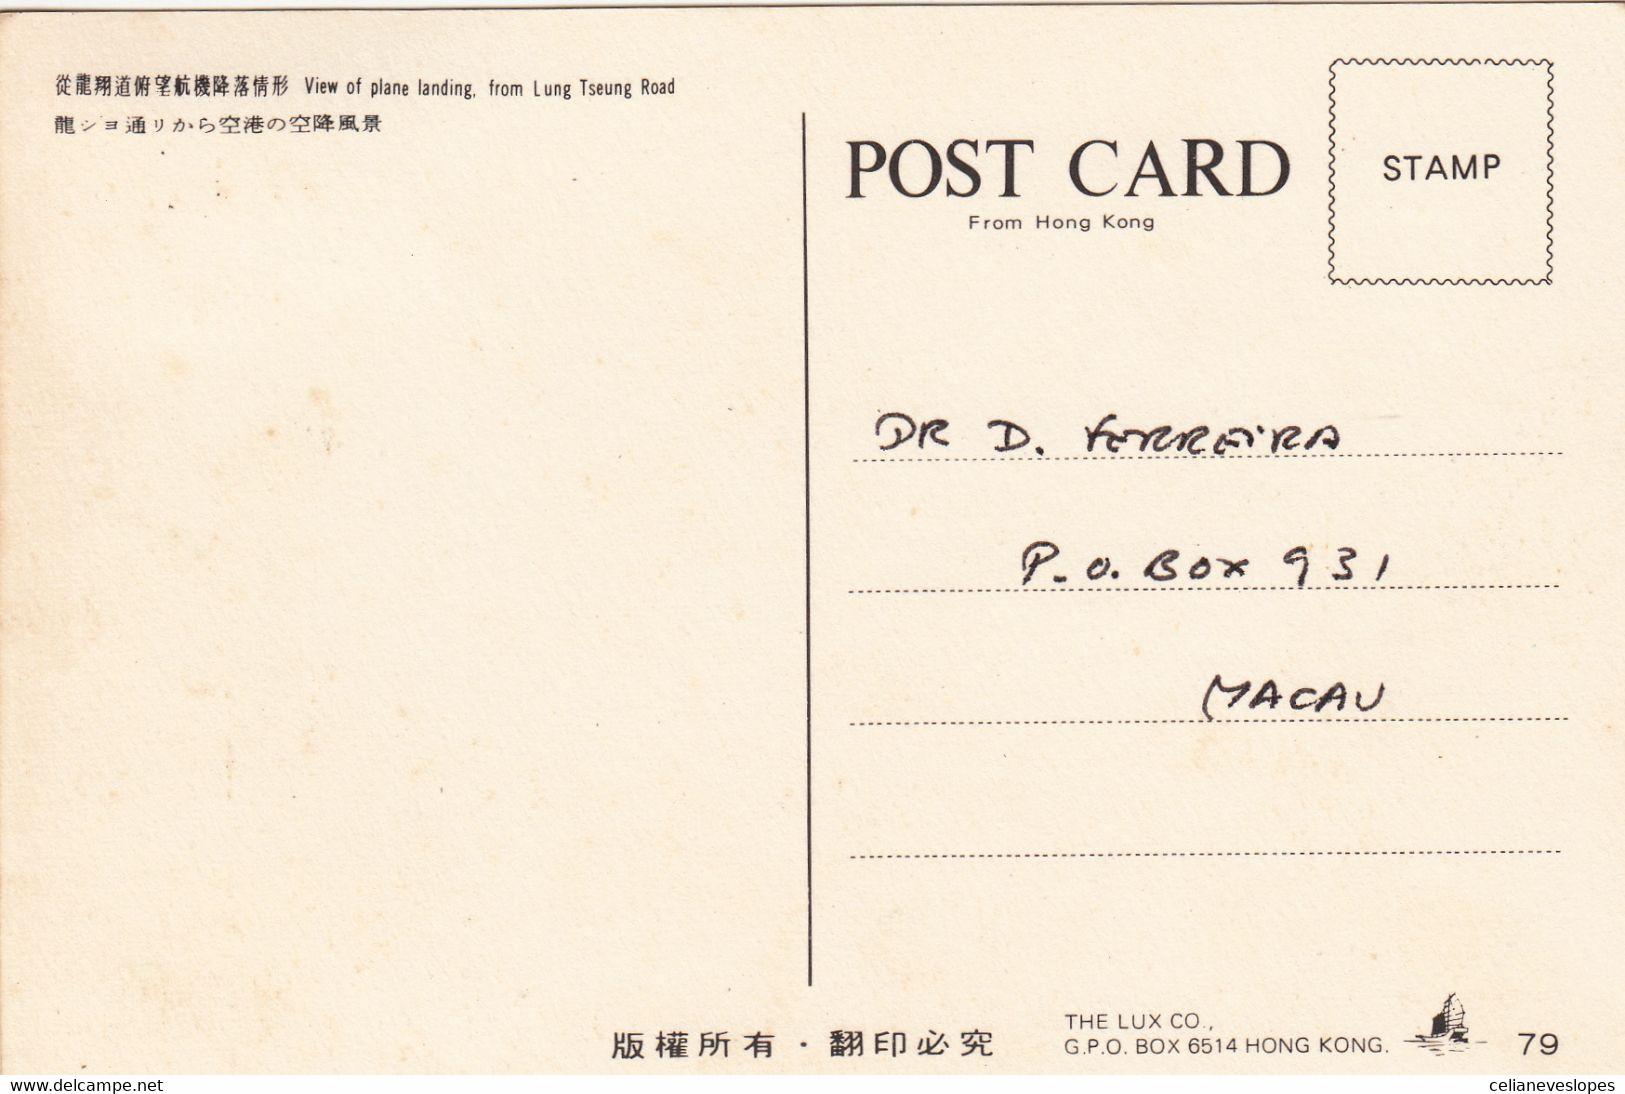 Hong Kong, Maximum Cards, (105), Expo 86, 1989, Circulado - Cartes-maximum